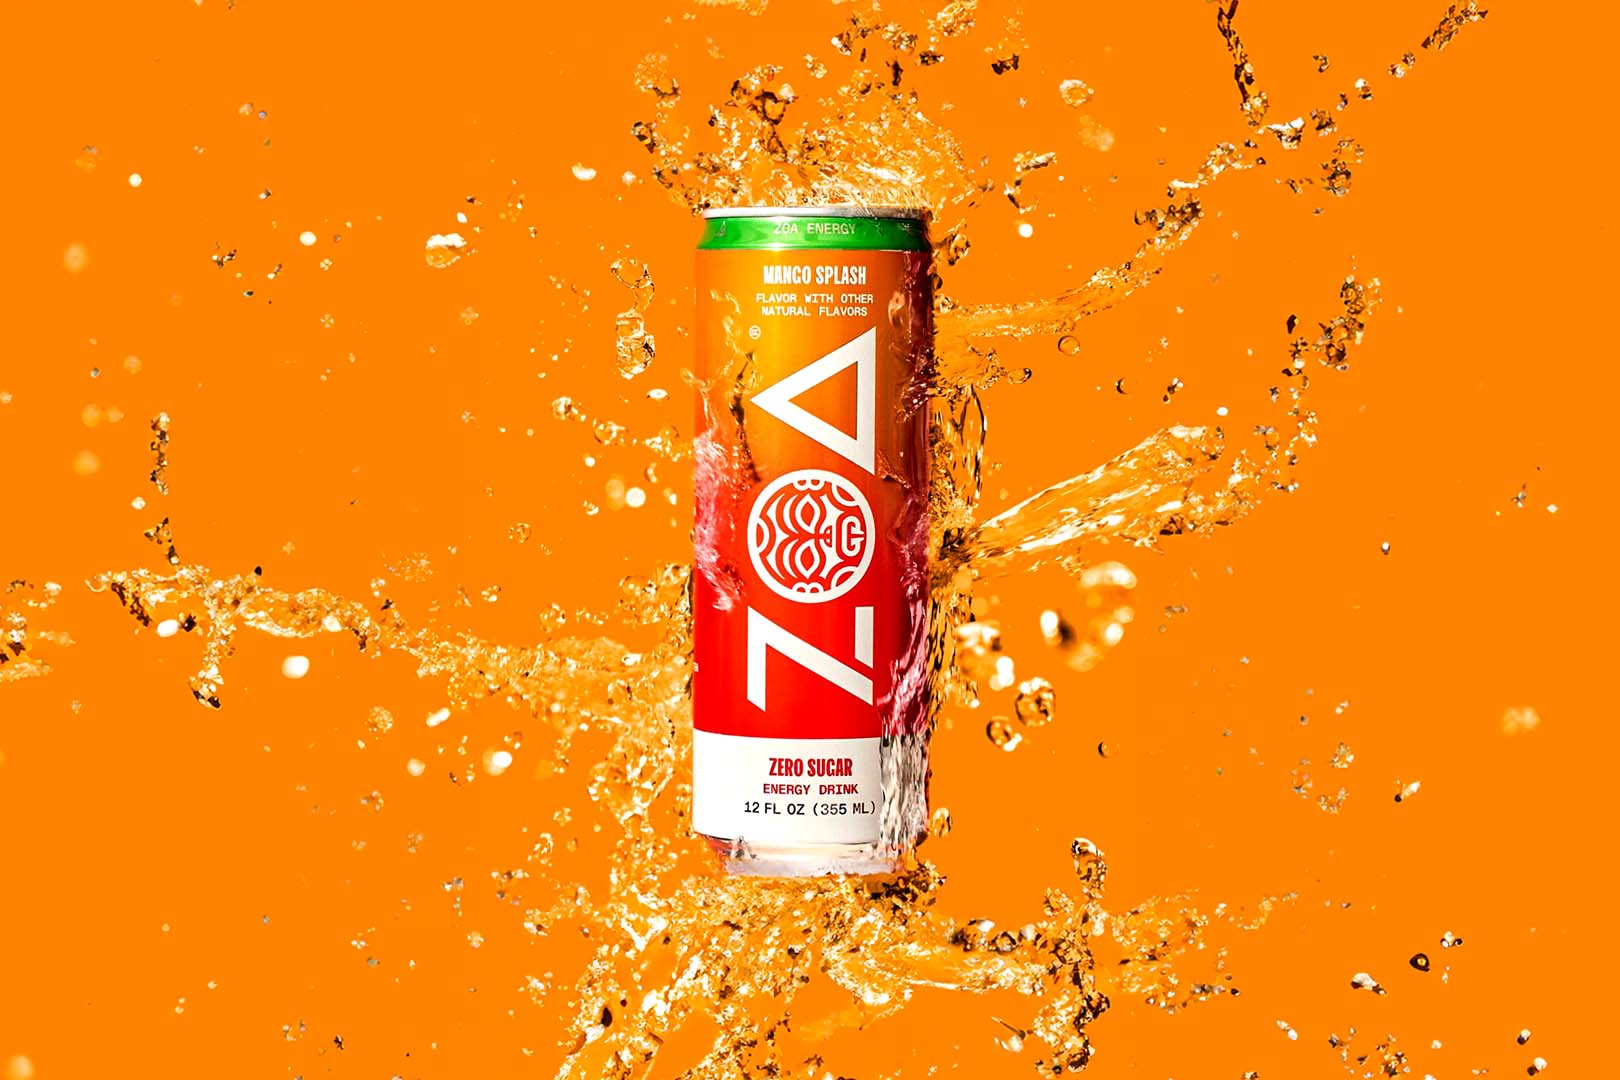 Mango Splash Zoa Energy Drink